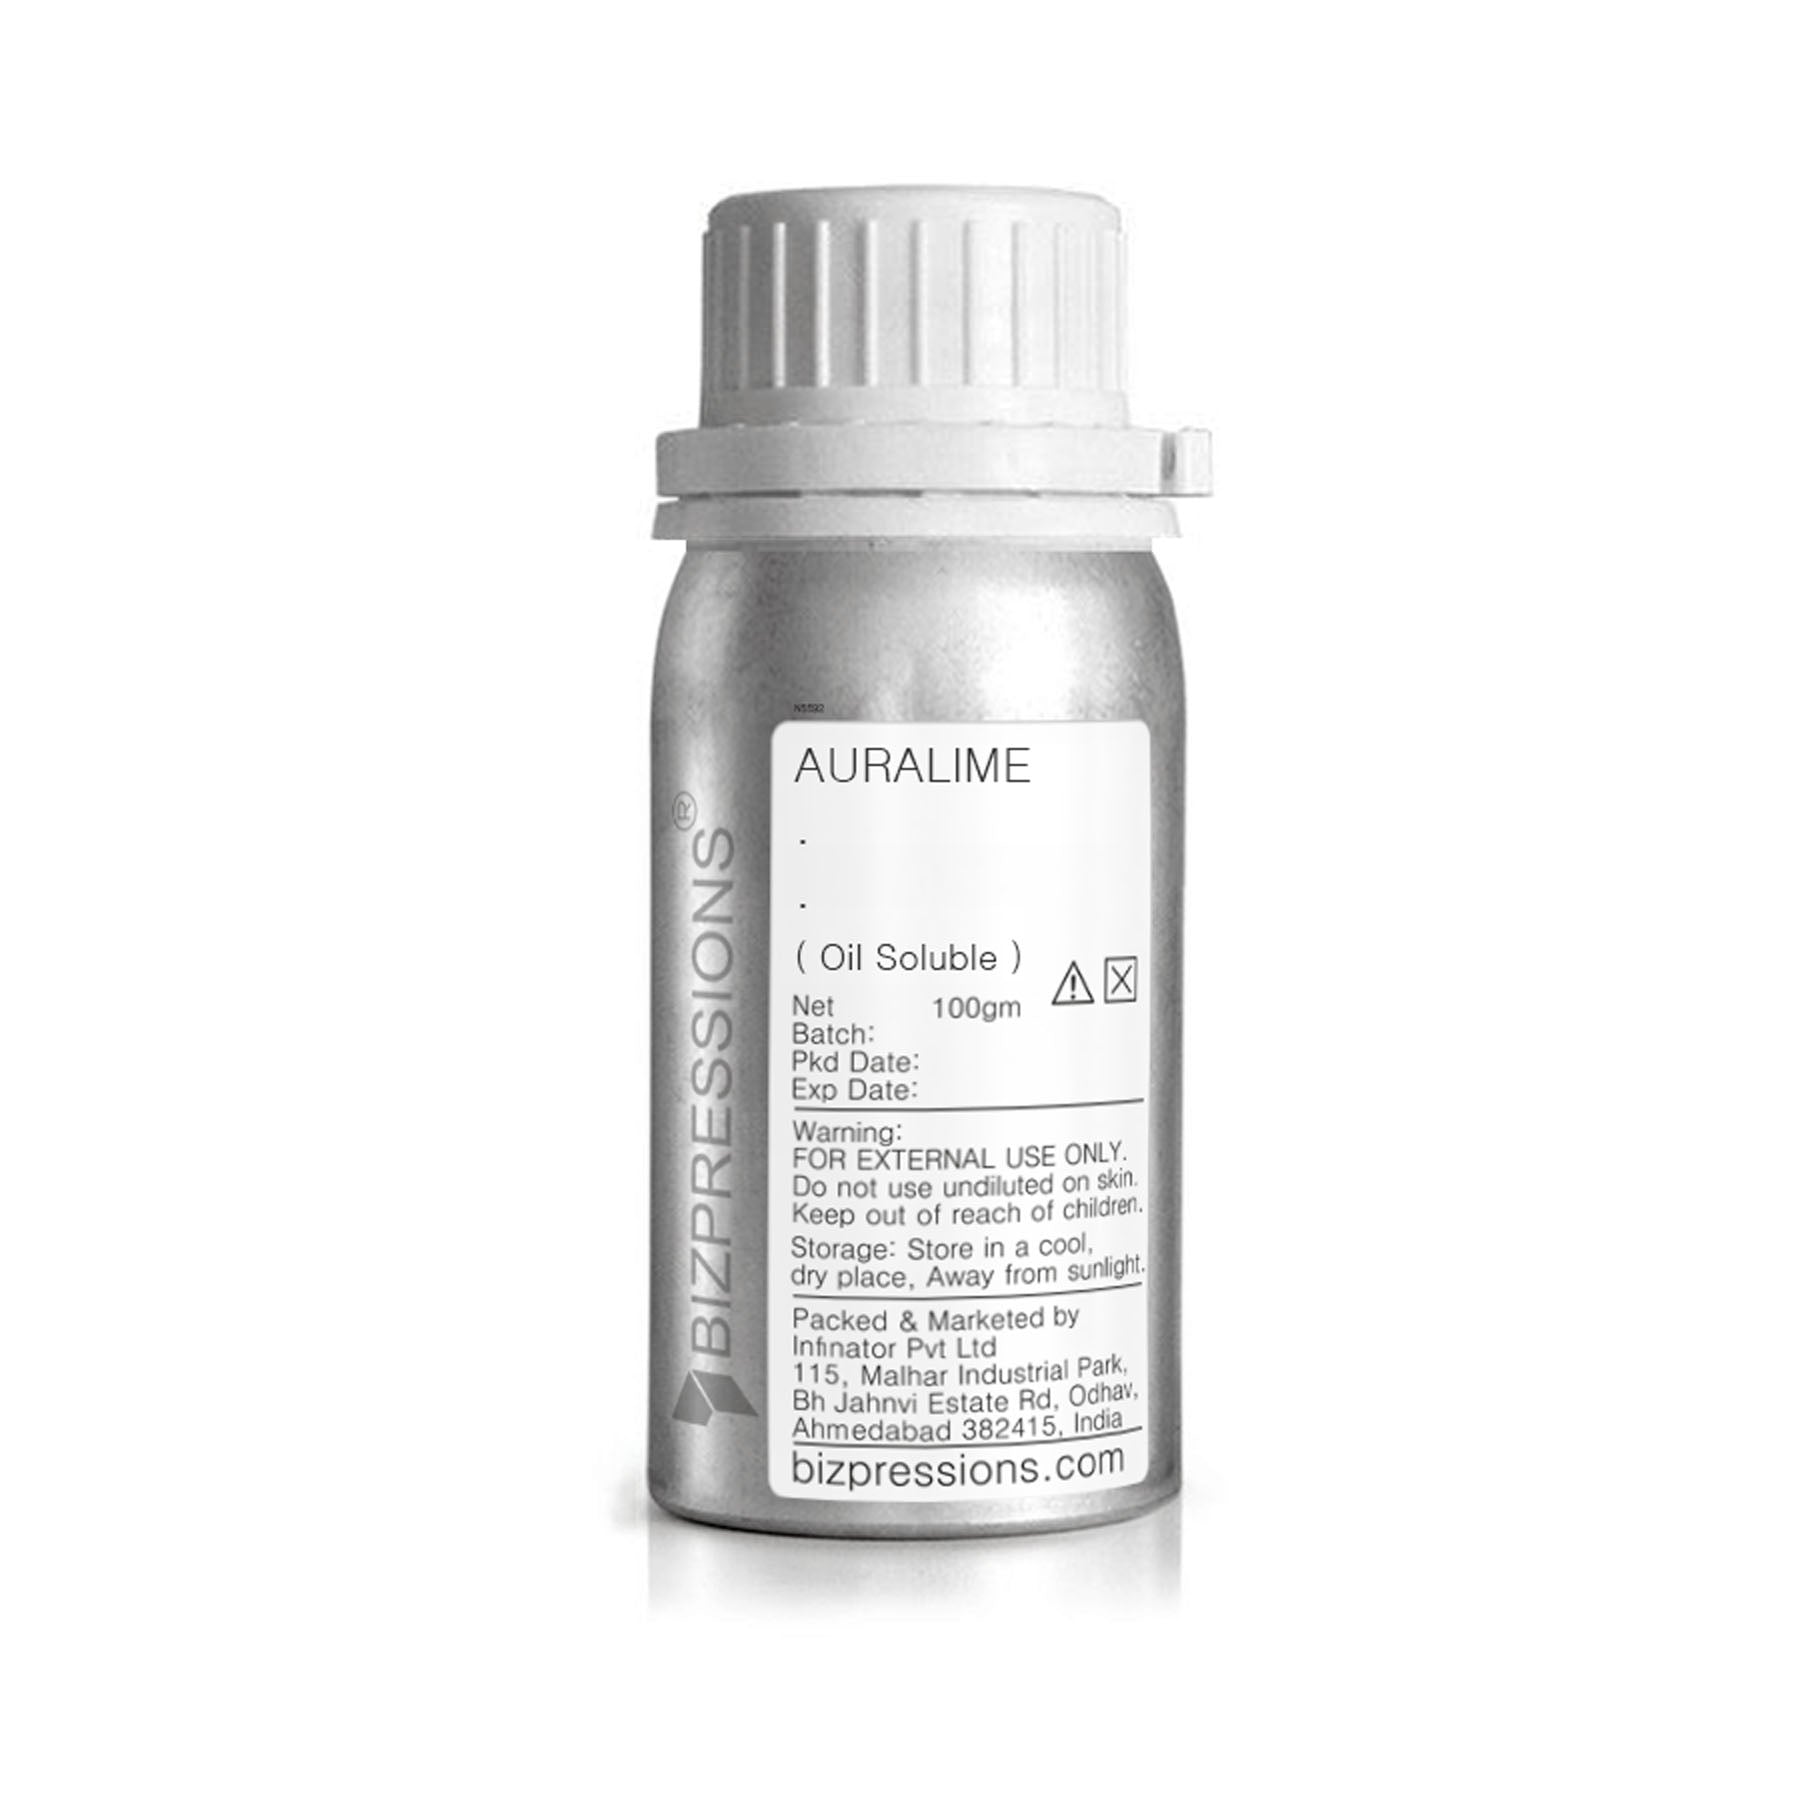 AURALIME - Fragrance ( Oil Soluble ) - 100 gm